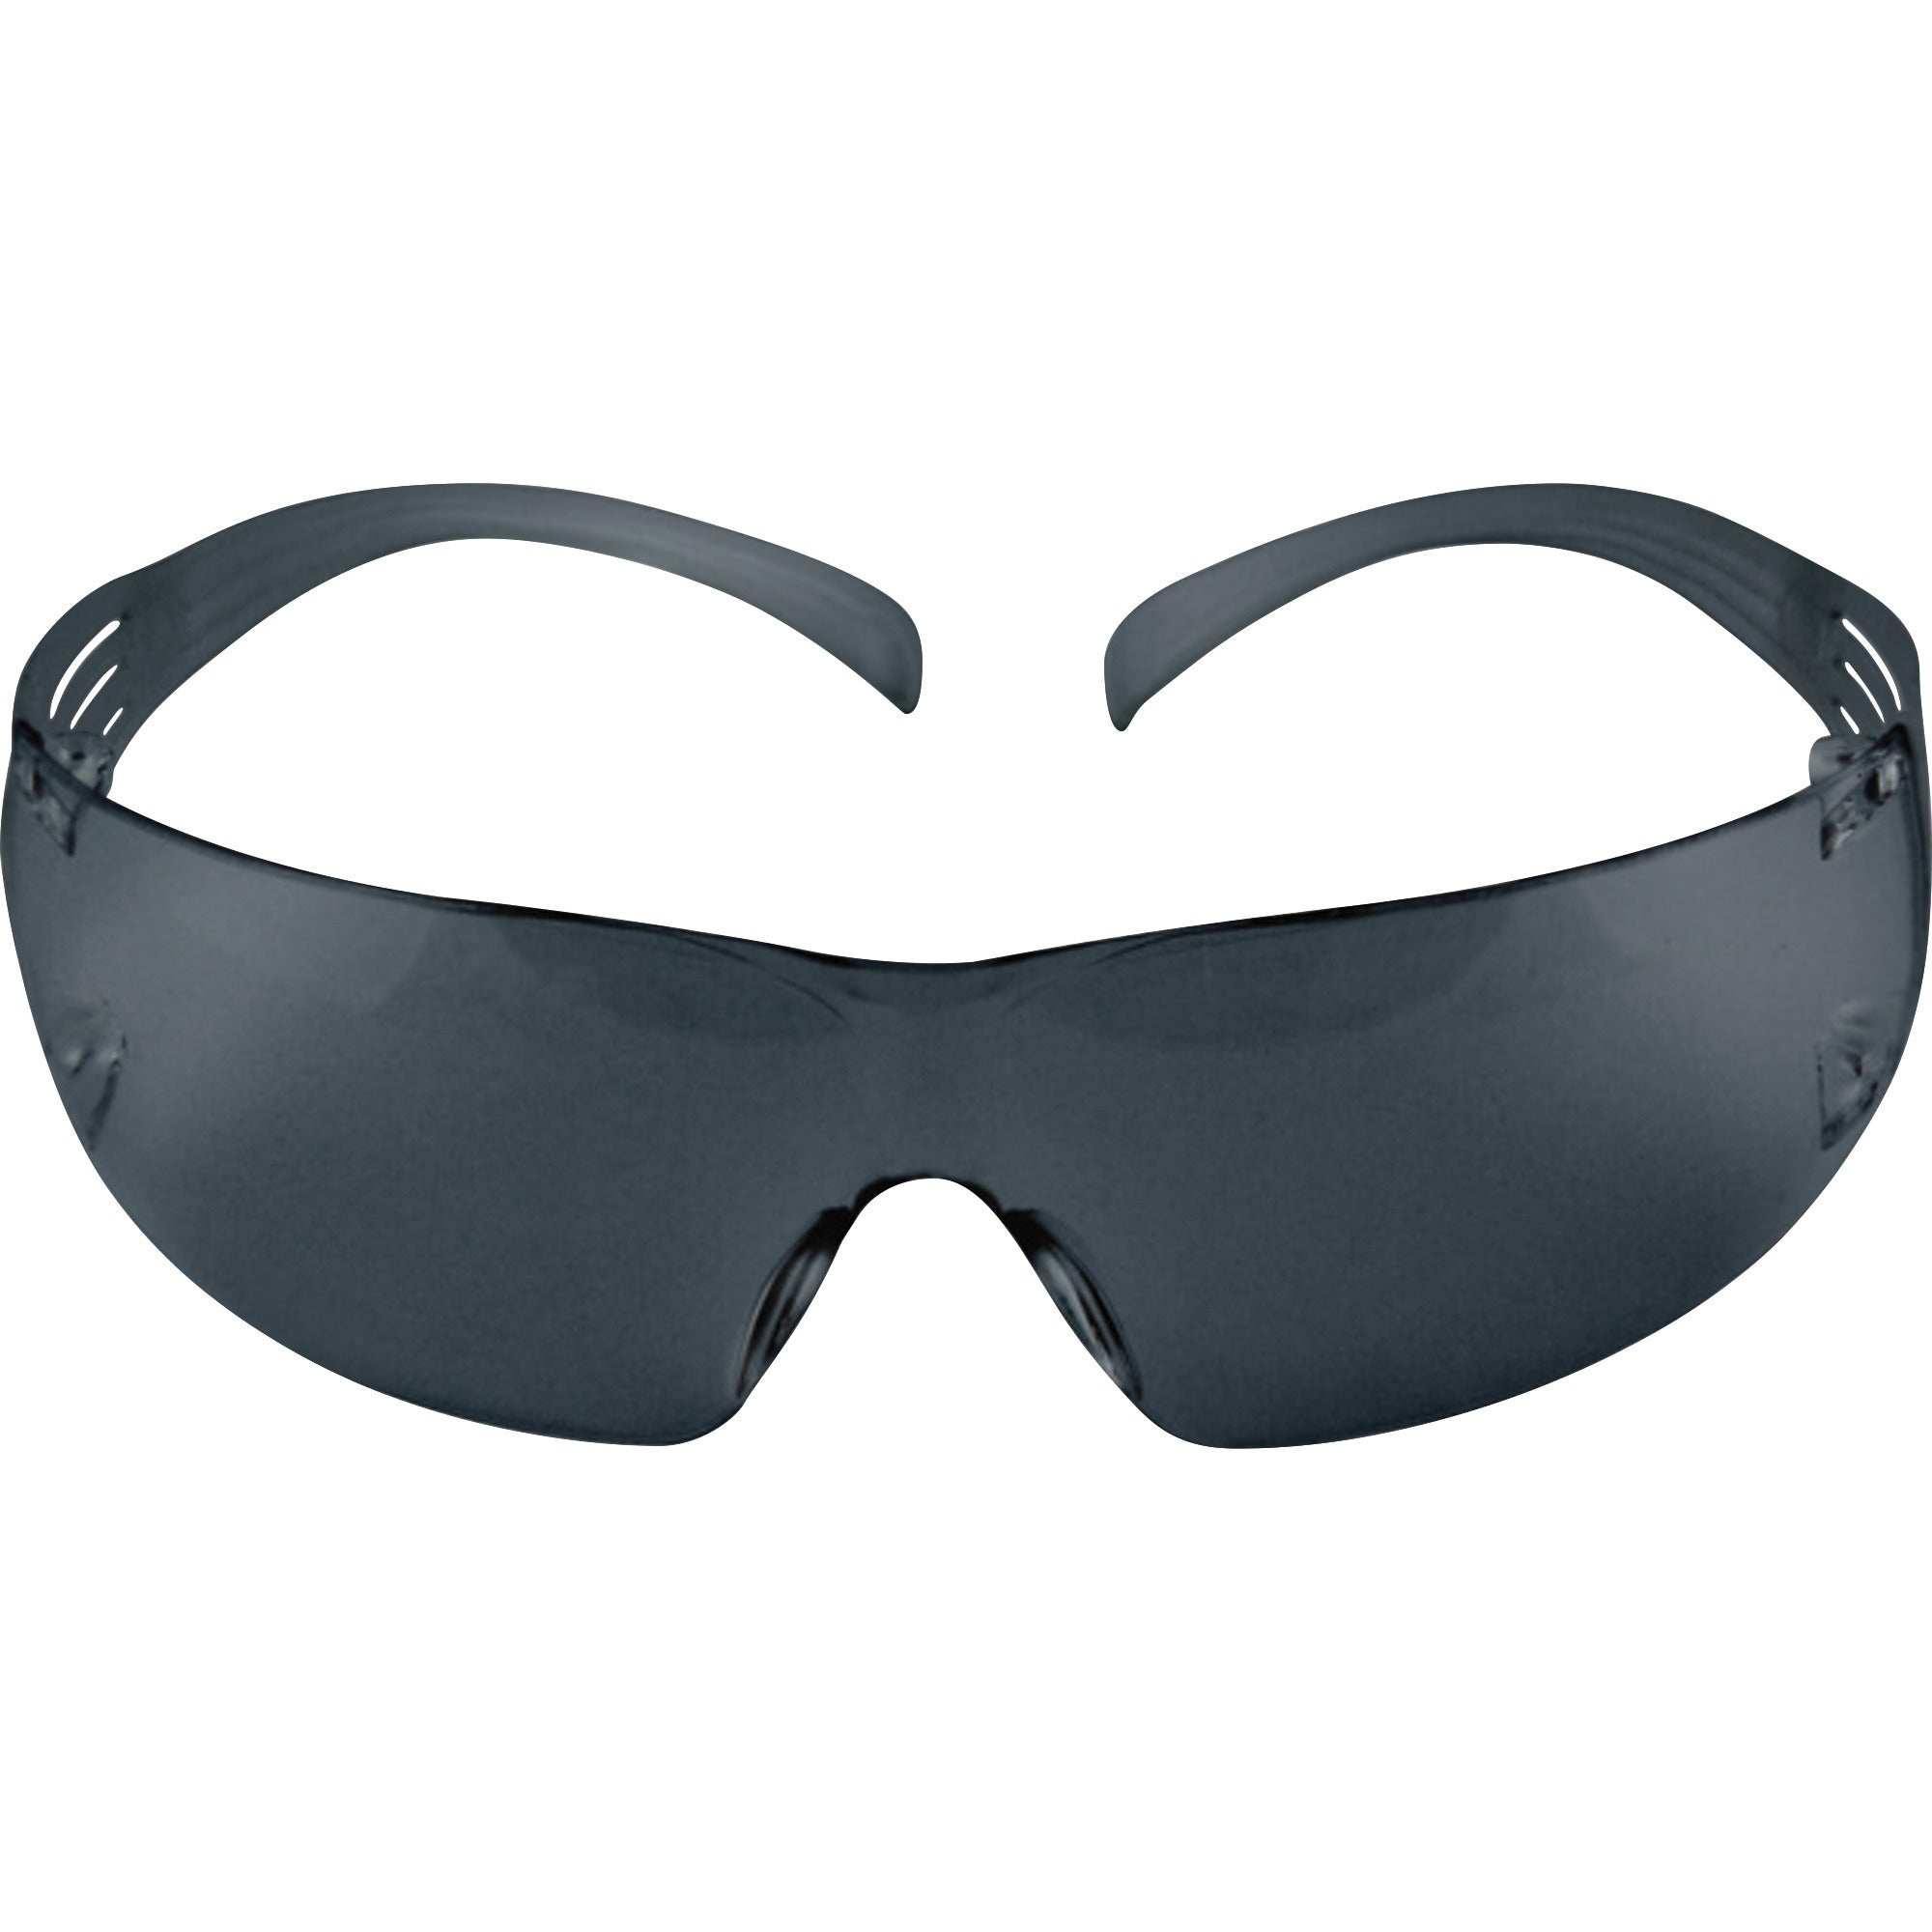 3m-securefit-protective-eyewear-ultraviolet-protection-1-each_mmmsf202af - 2